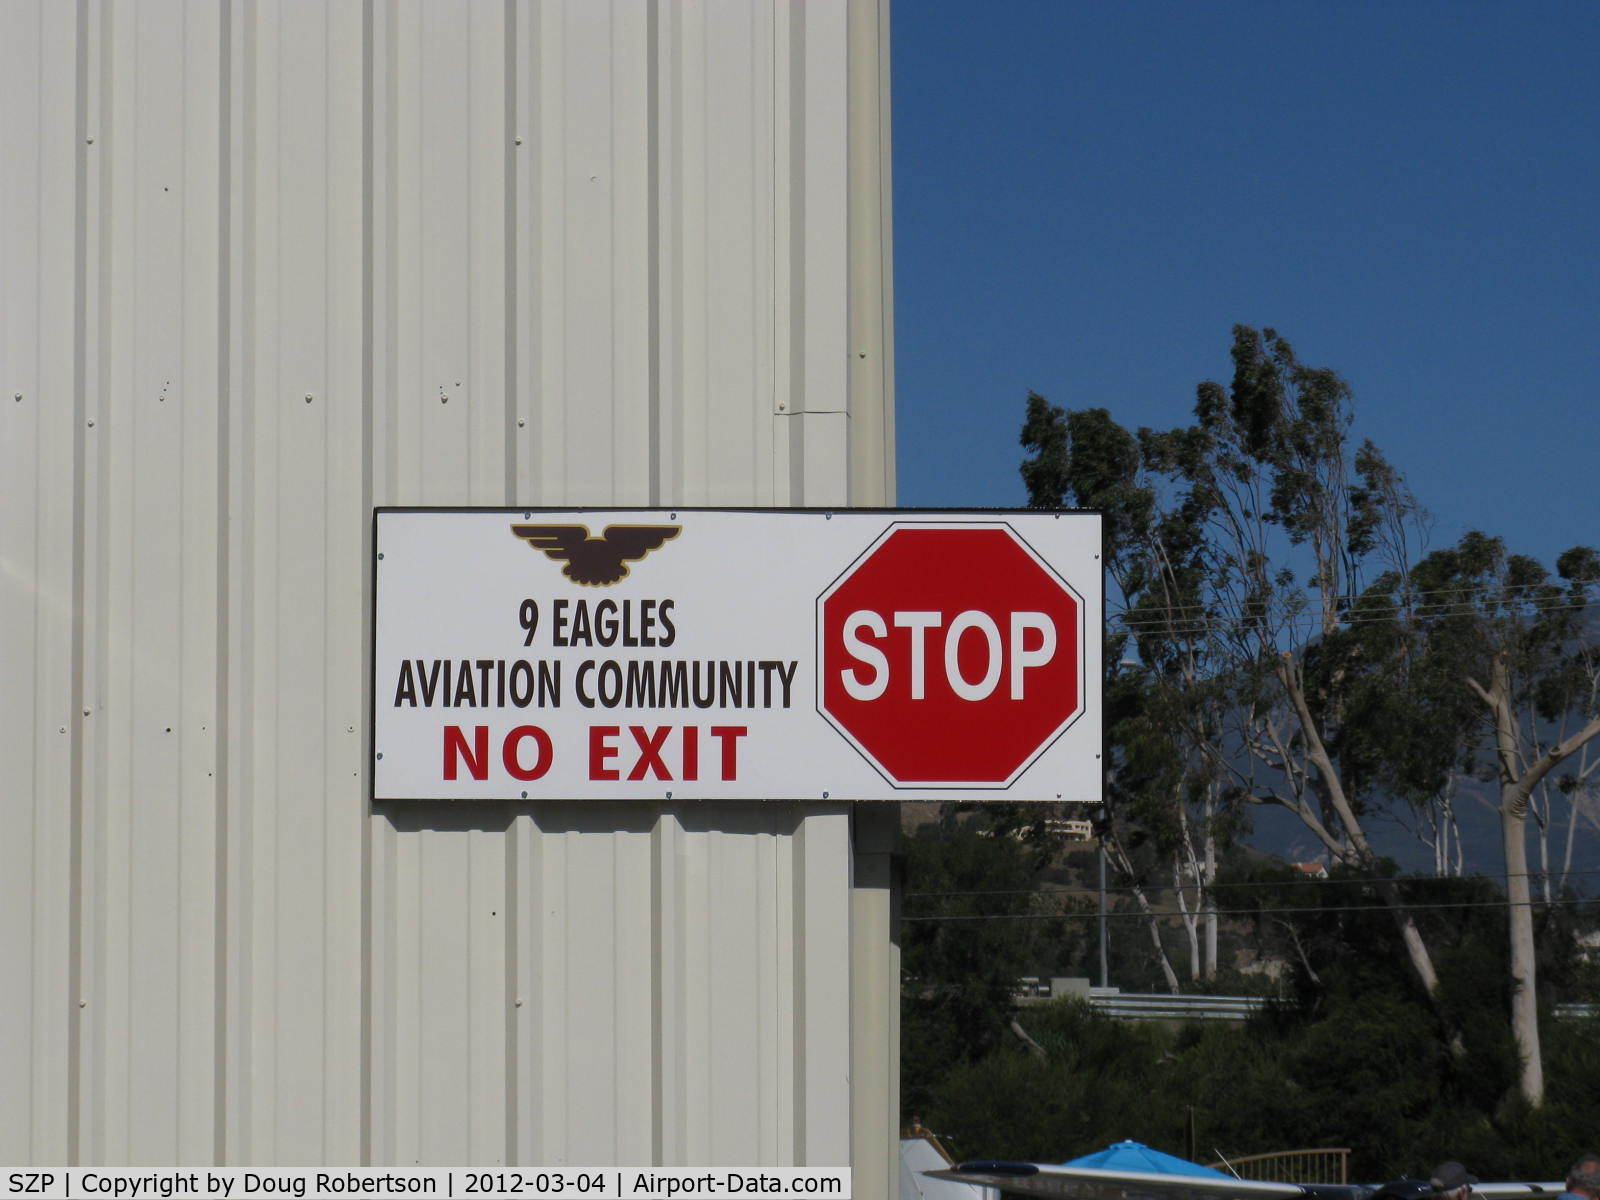 Santa Paula Airport (SZP) - 9 Eagles Aviation Community hangars. Entry warning of cul-de-sac